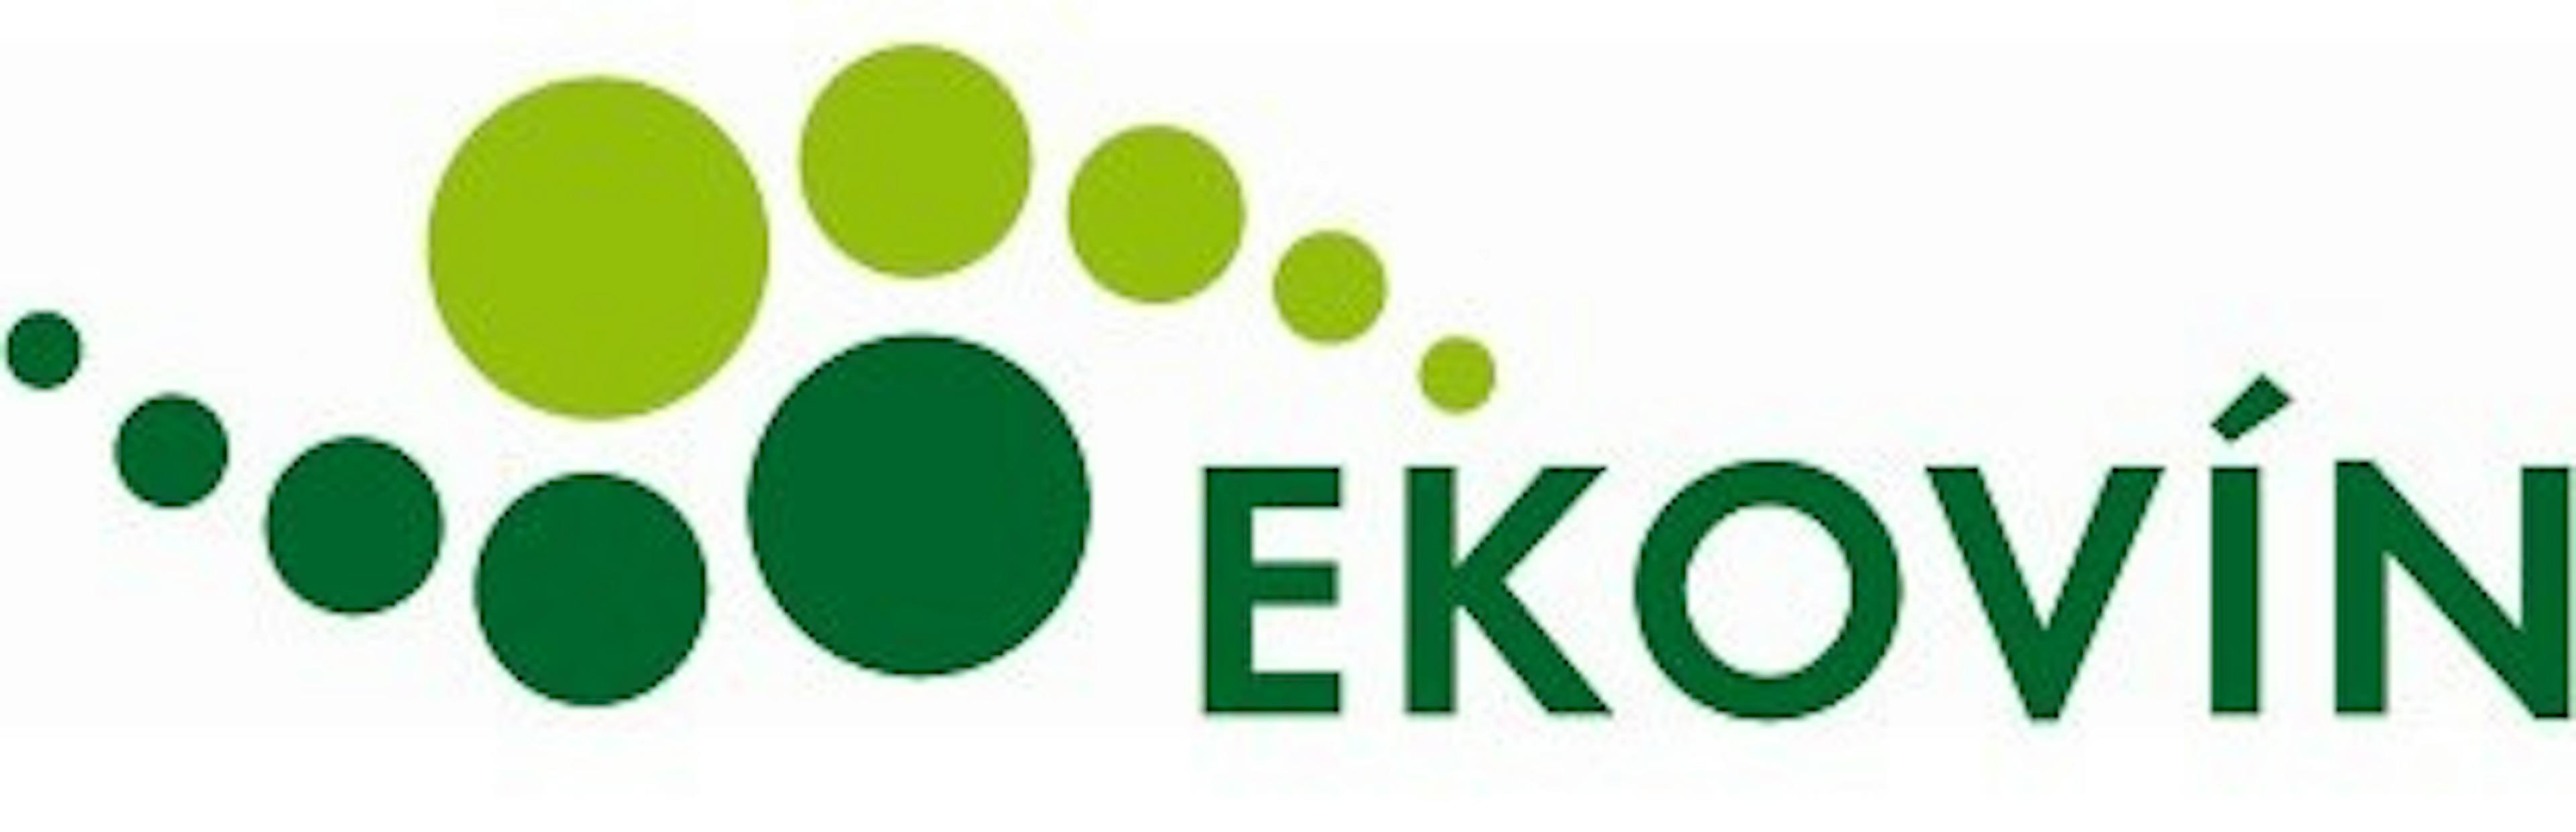 Ekovín logo